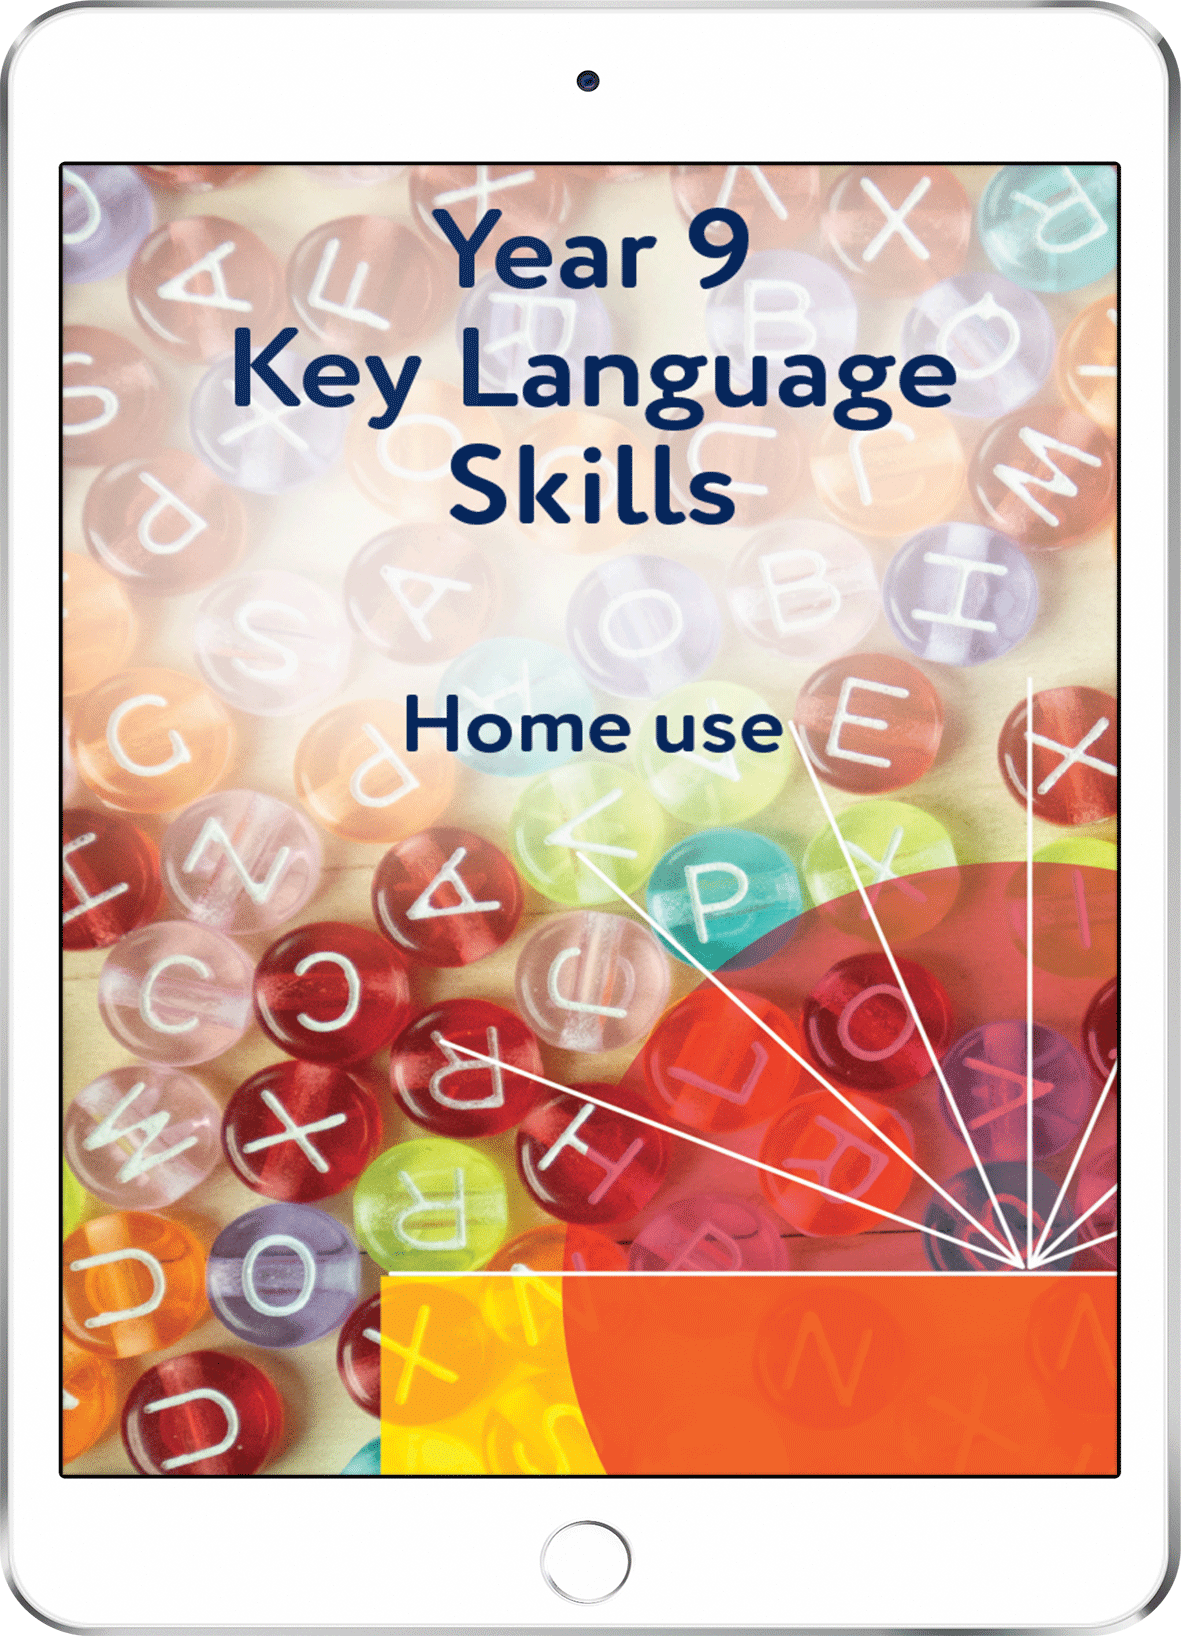 Year 9 Key Language Skills - Home Use